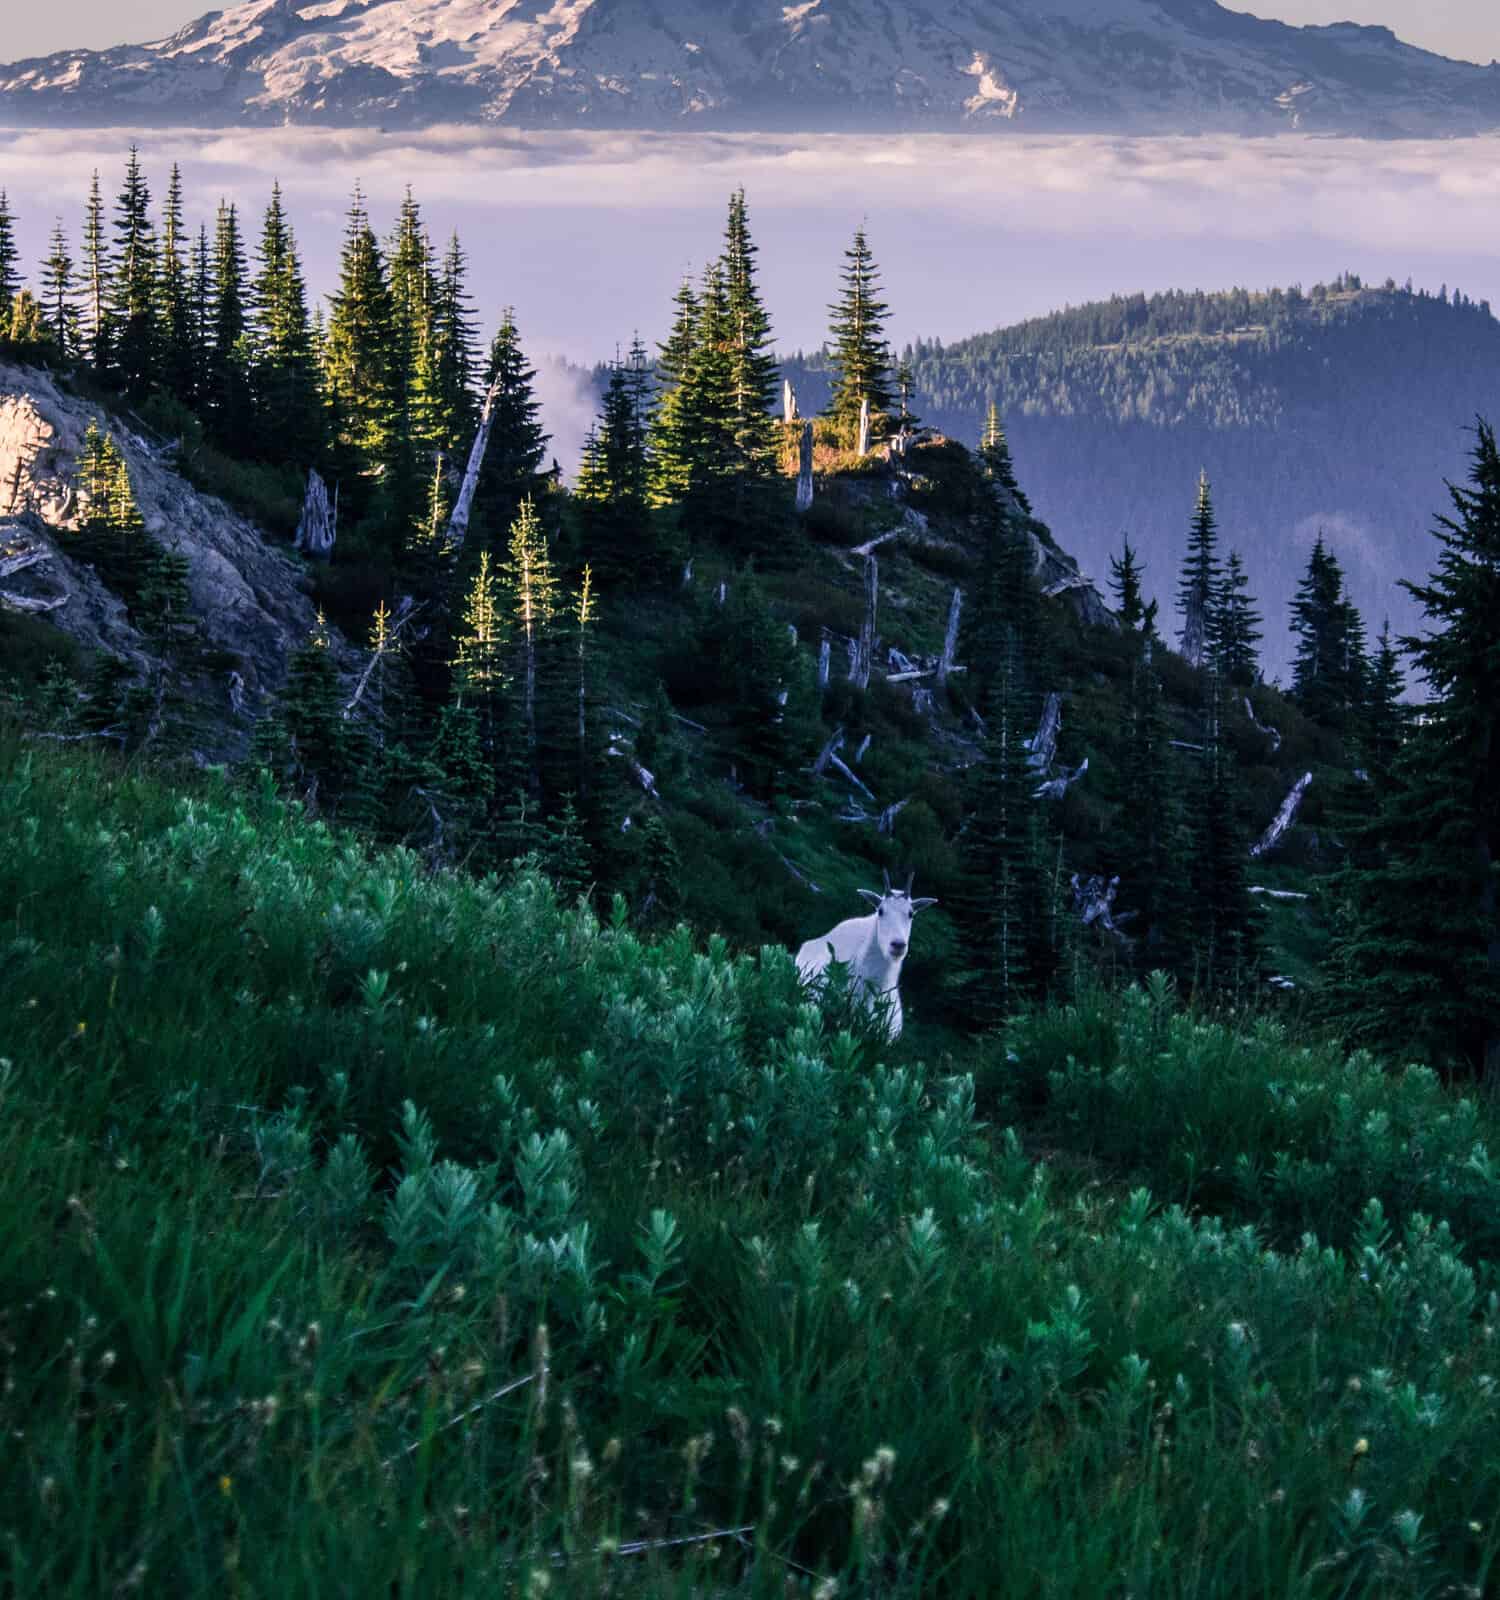 Mount Rainier Behind a Curious Goat